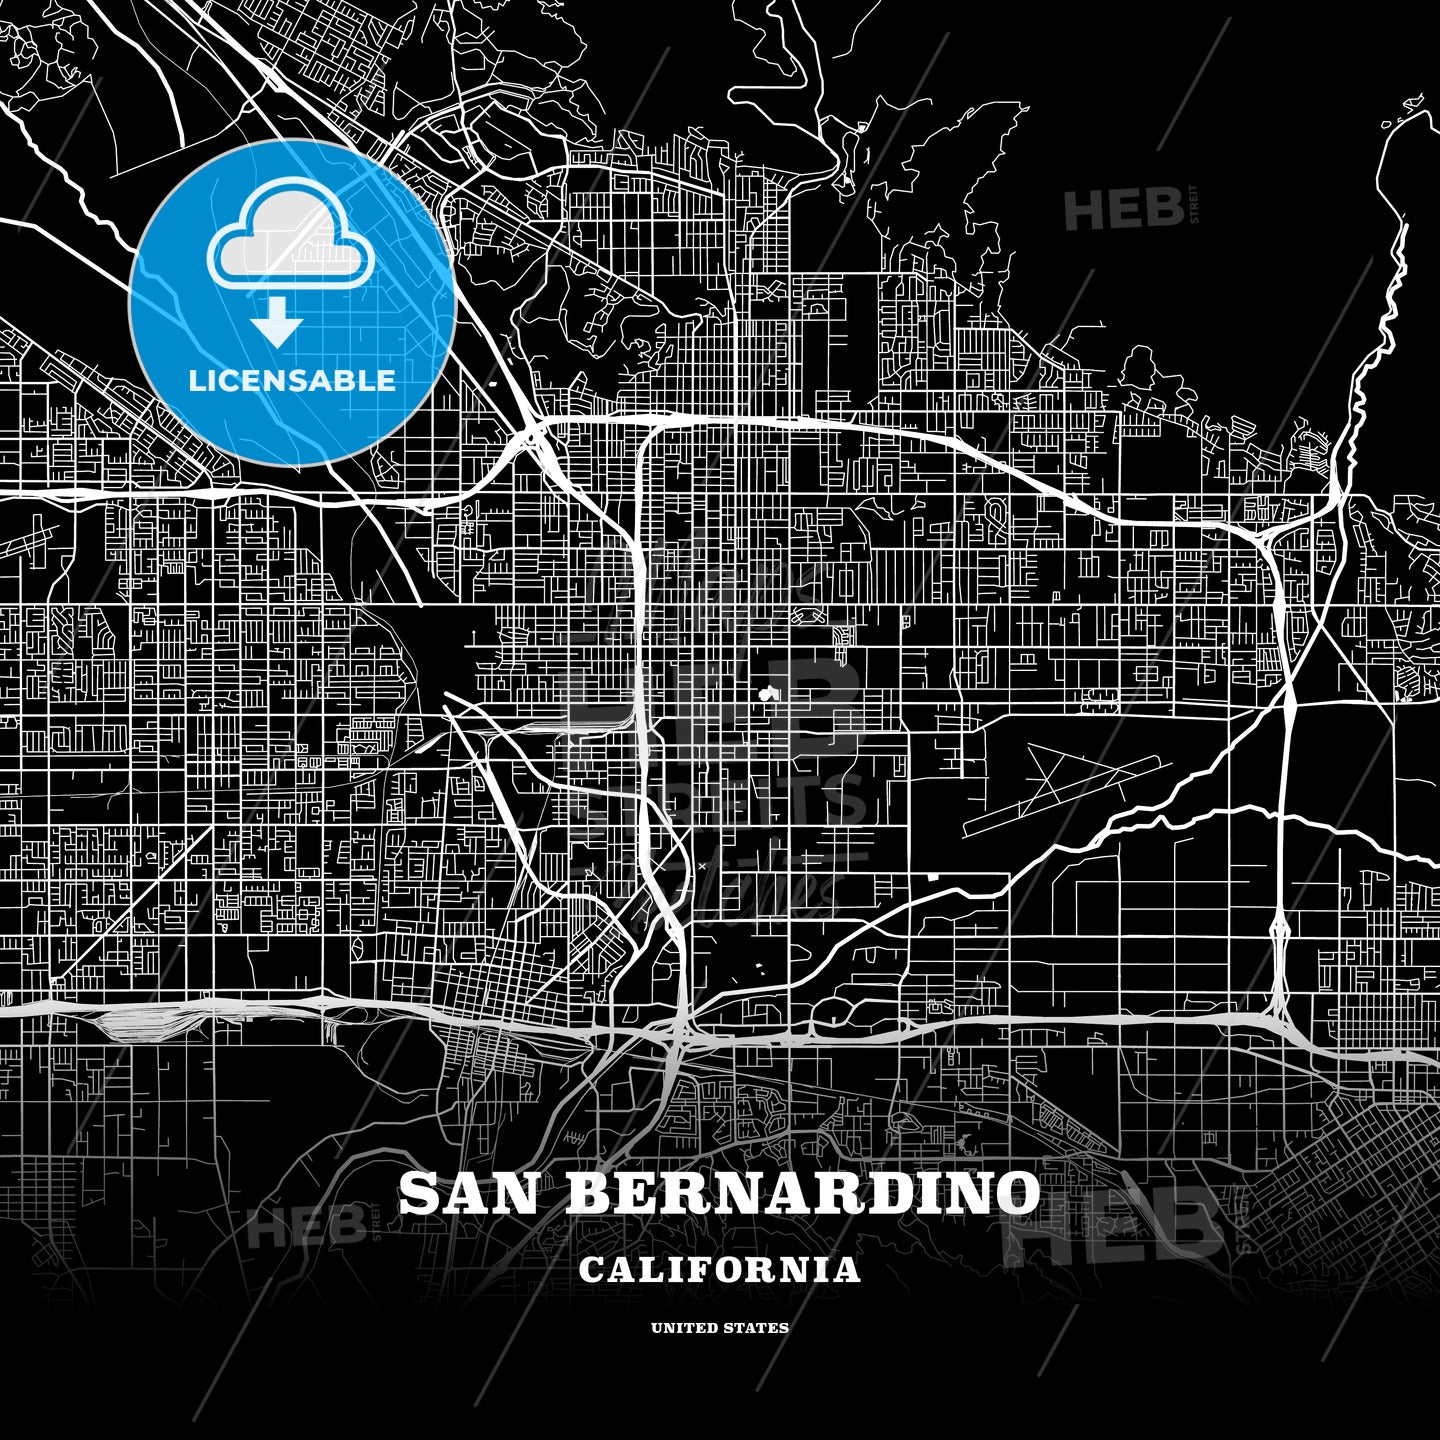 San Bernardino, California, USA map